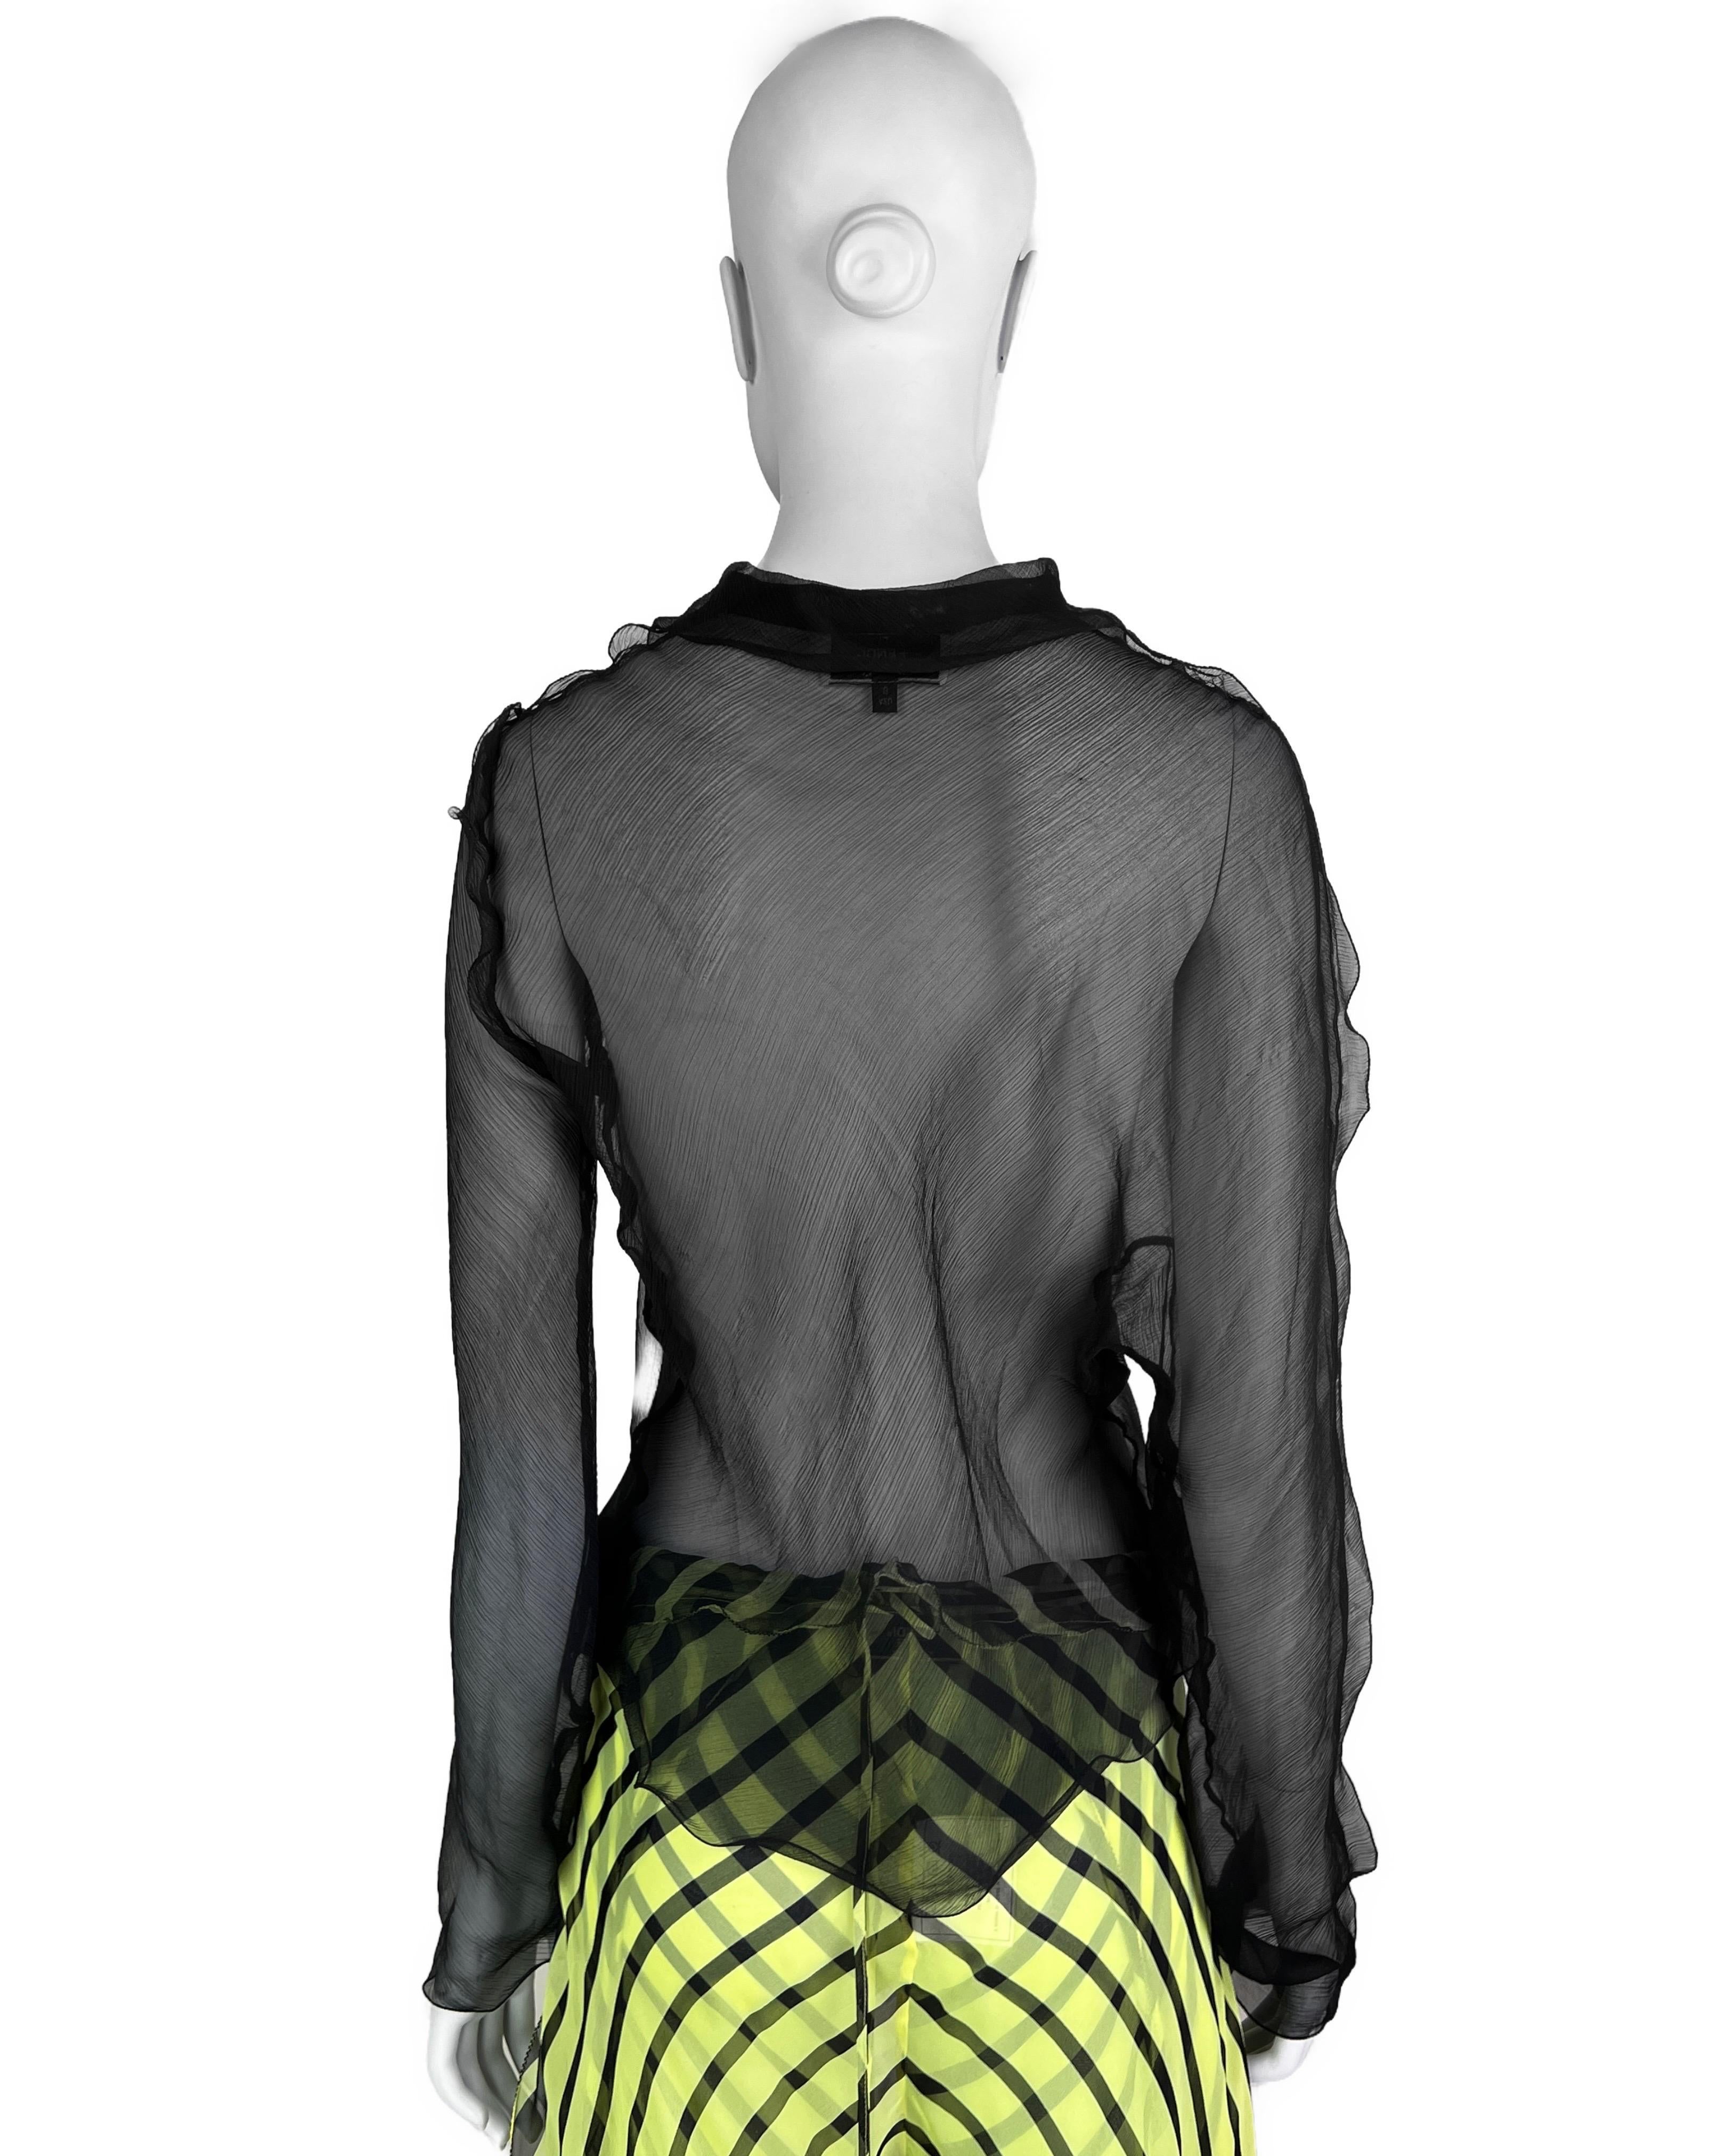 Fendi by Karl Lagerfeld Spring 2000 Asymmetrical Silk Blouse For Sale 1